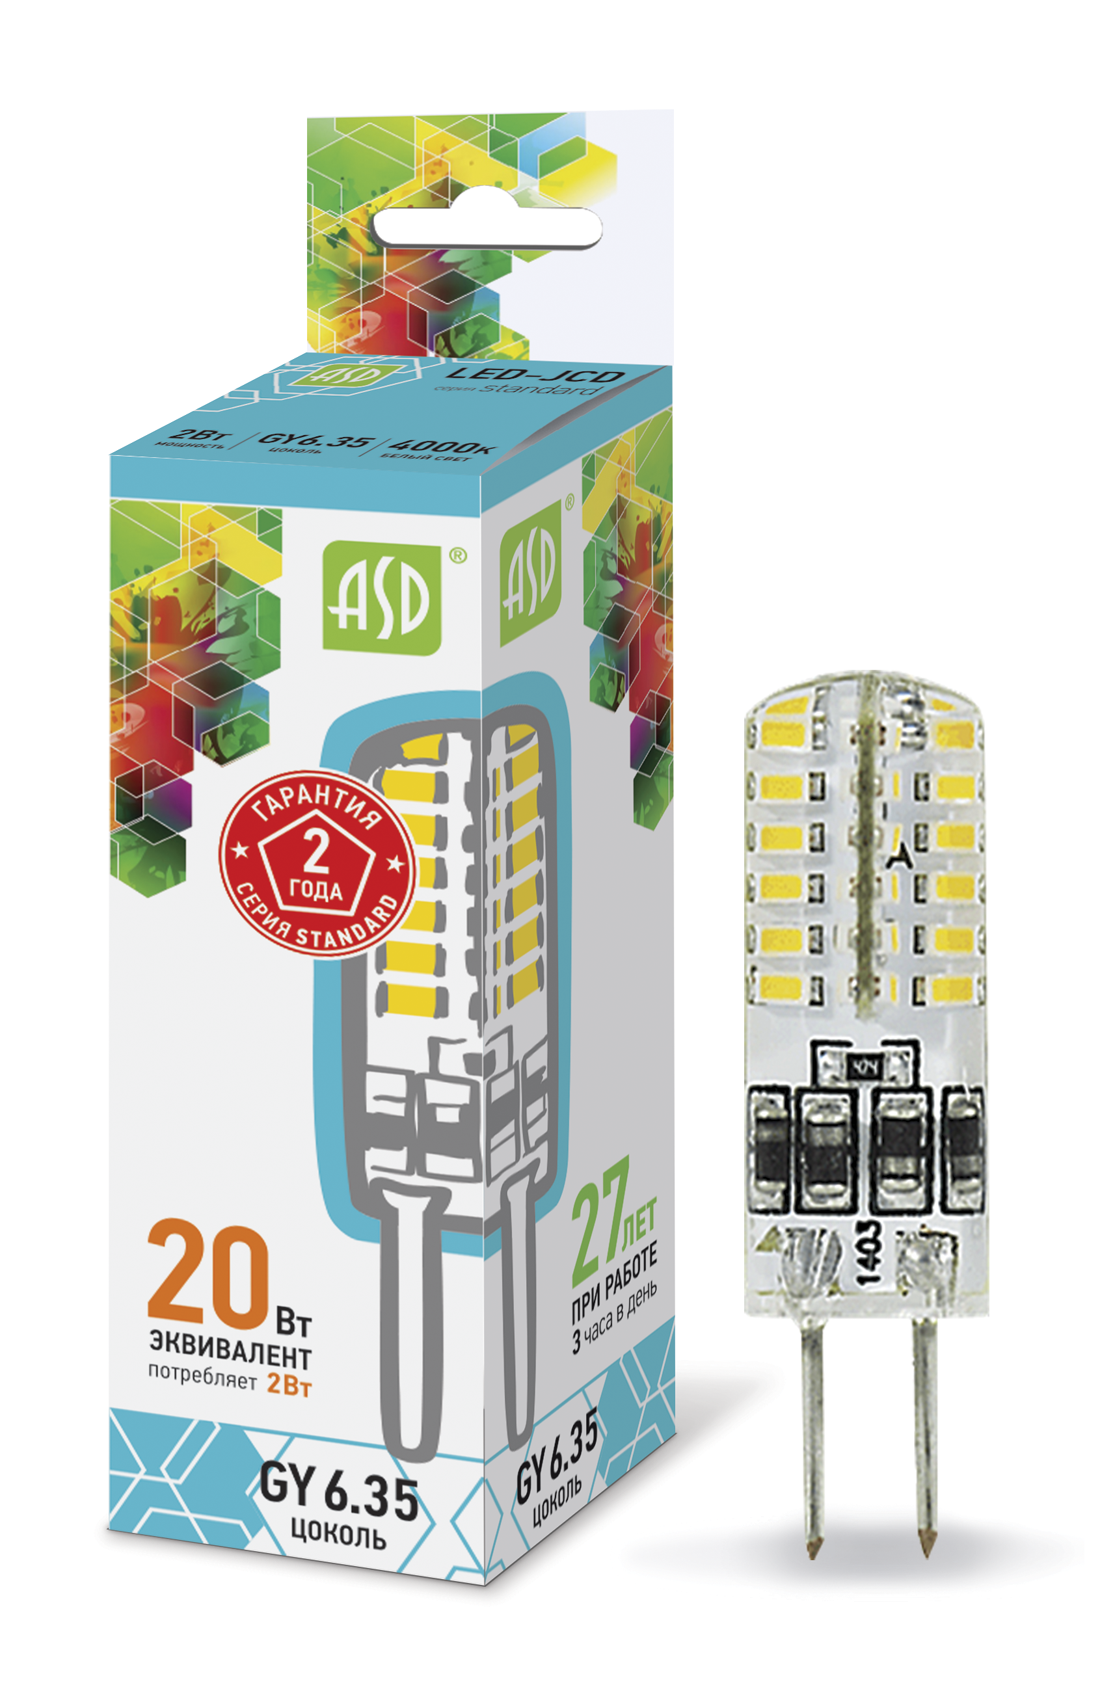 Купить лампа светодиодная led-jcd-standard 2вт 230в gy6,35 4000к 180лм asd, 100% качество, в наличии на L-ed.ru